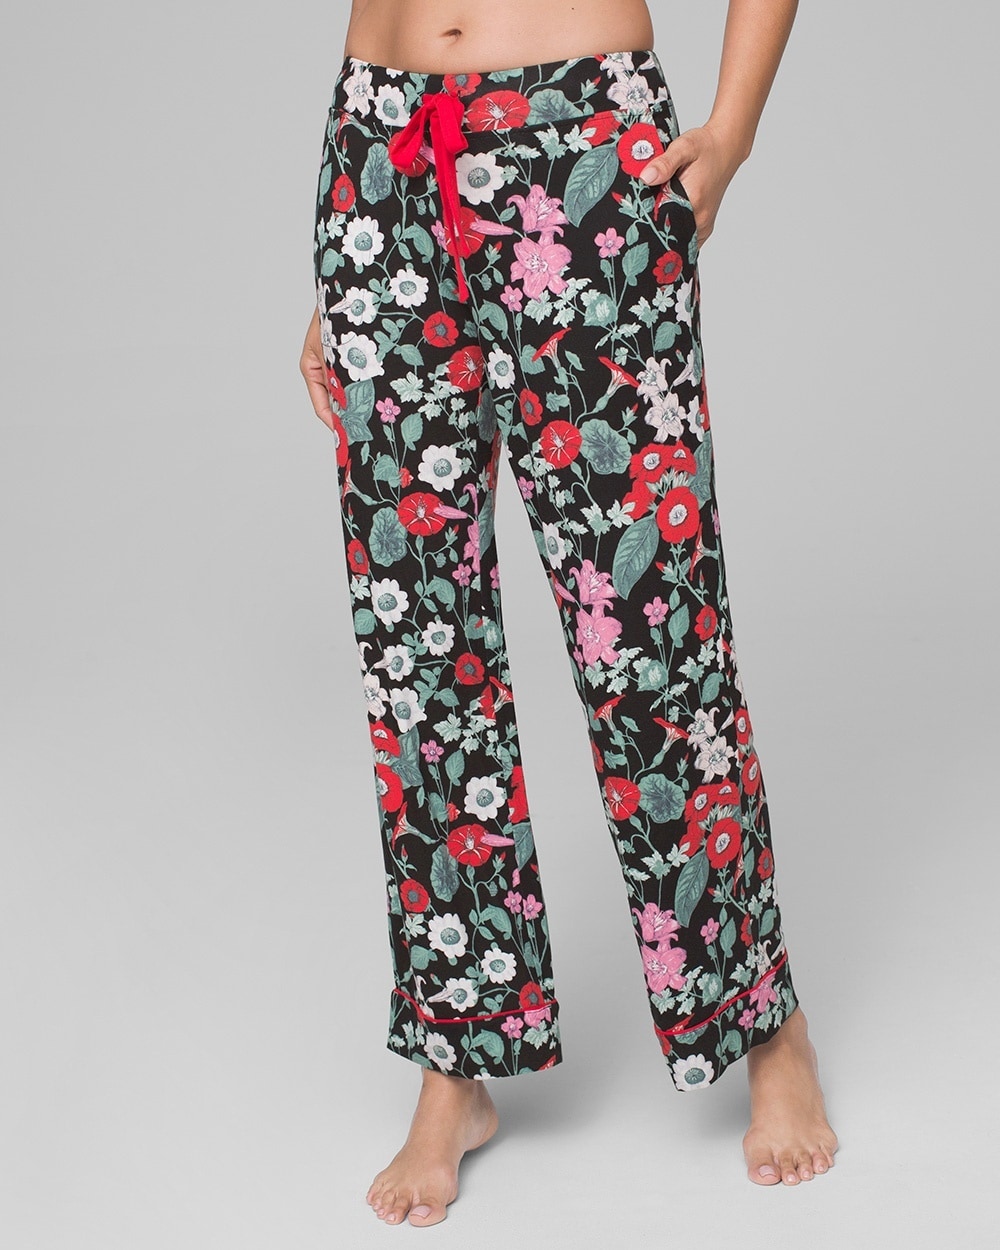 Cool Nights Satin Trim Pajama Pants Charming Floral Black RG